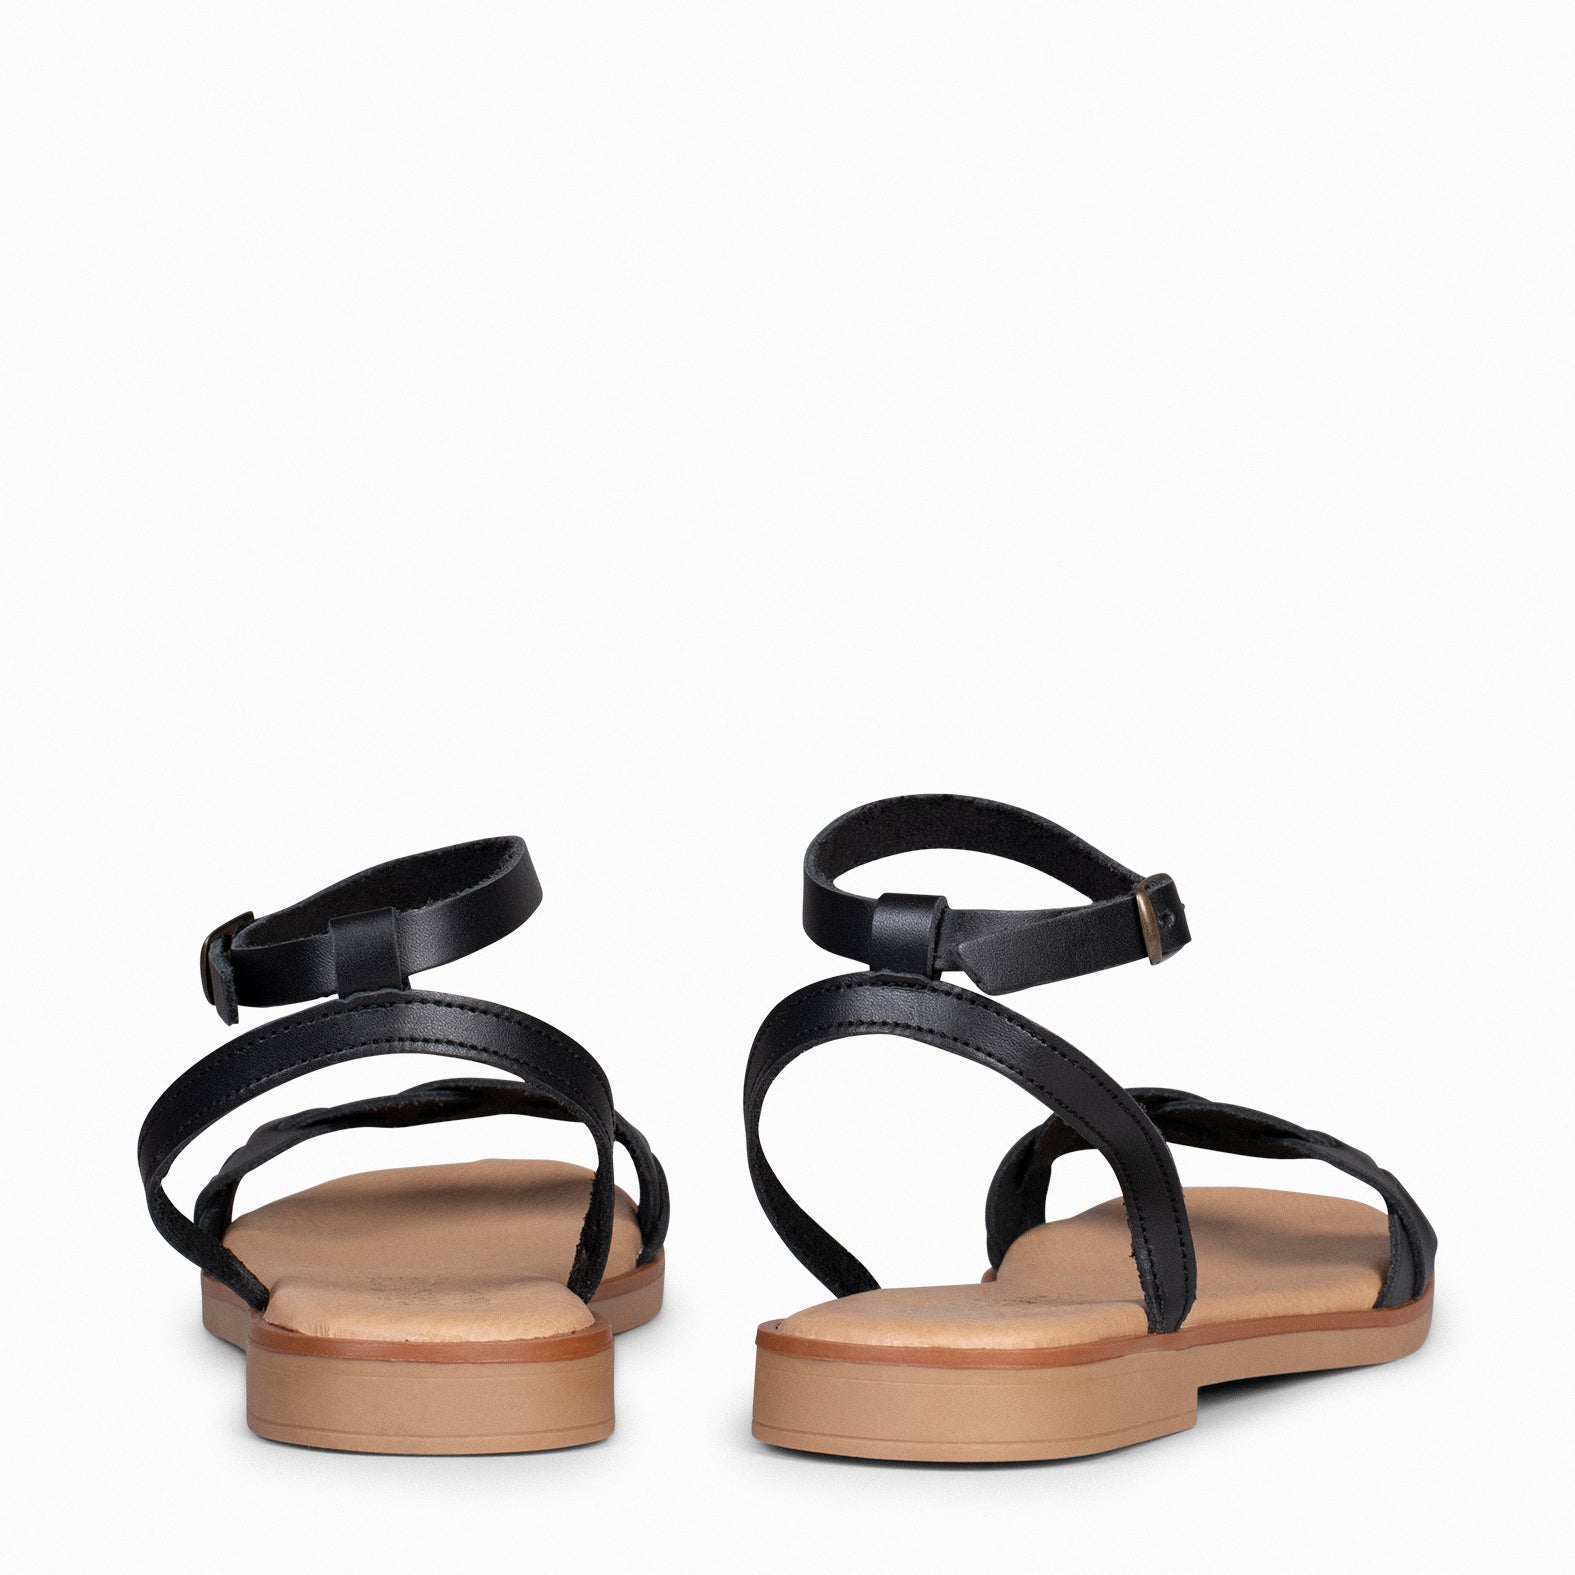 ARECA - BLACK Women's Flat Sandals